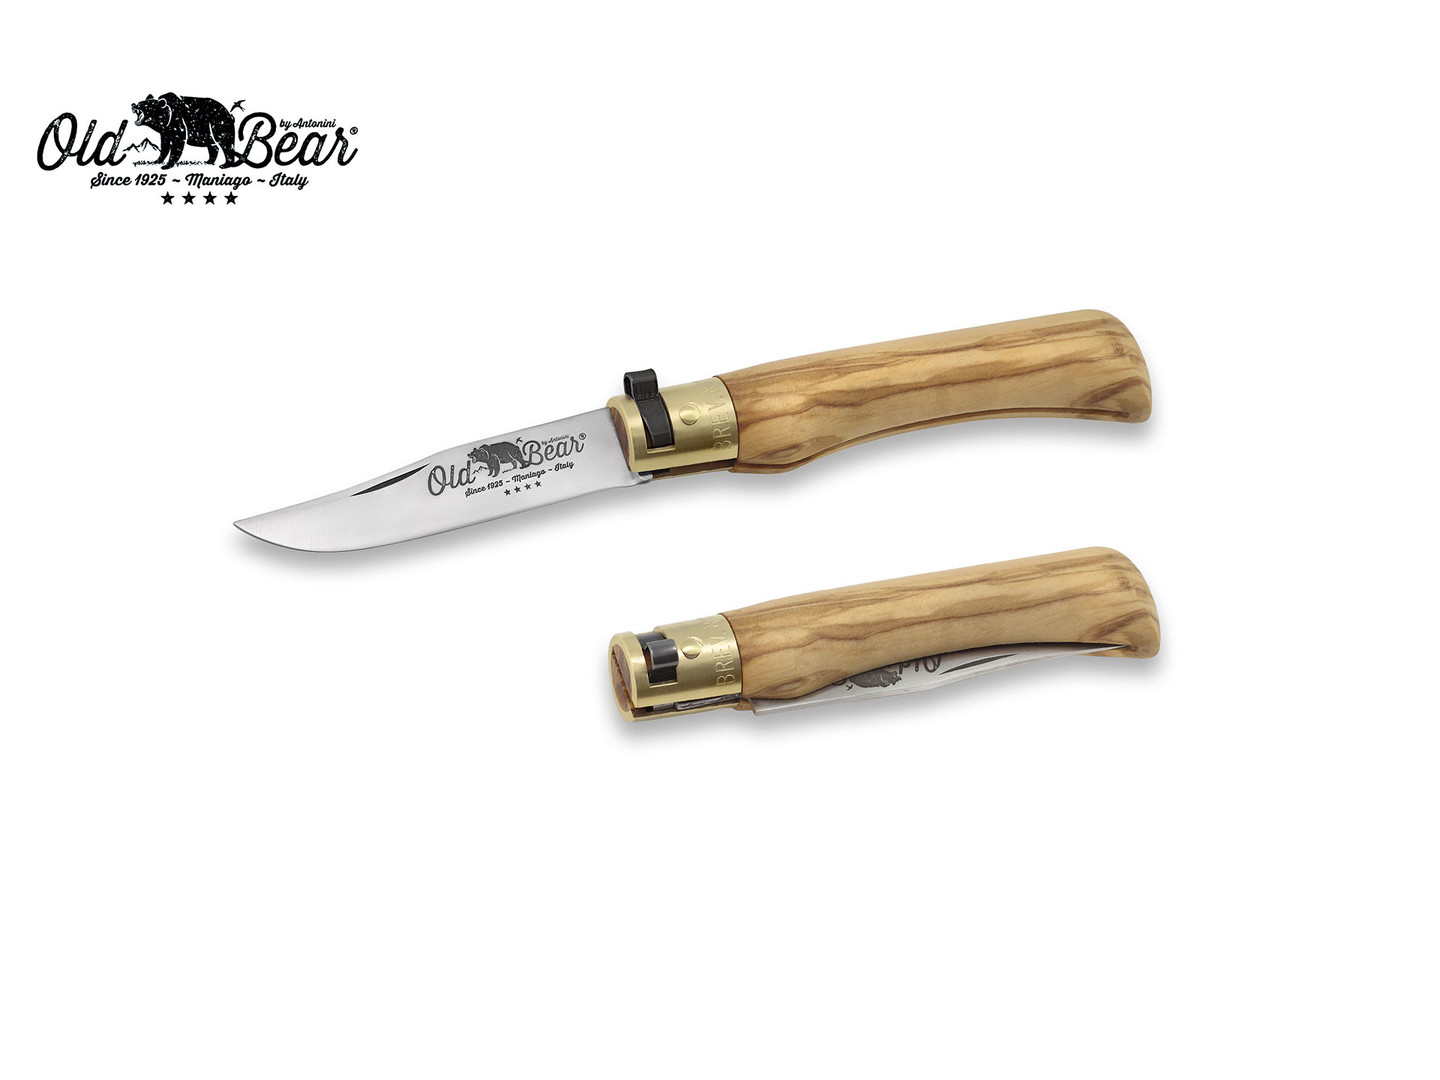 Нож Antonini Old Bear Classical Olive S 9307/17_LU нержавеющая сталь AISI 420 рукоять дерево олива, латунь